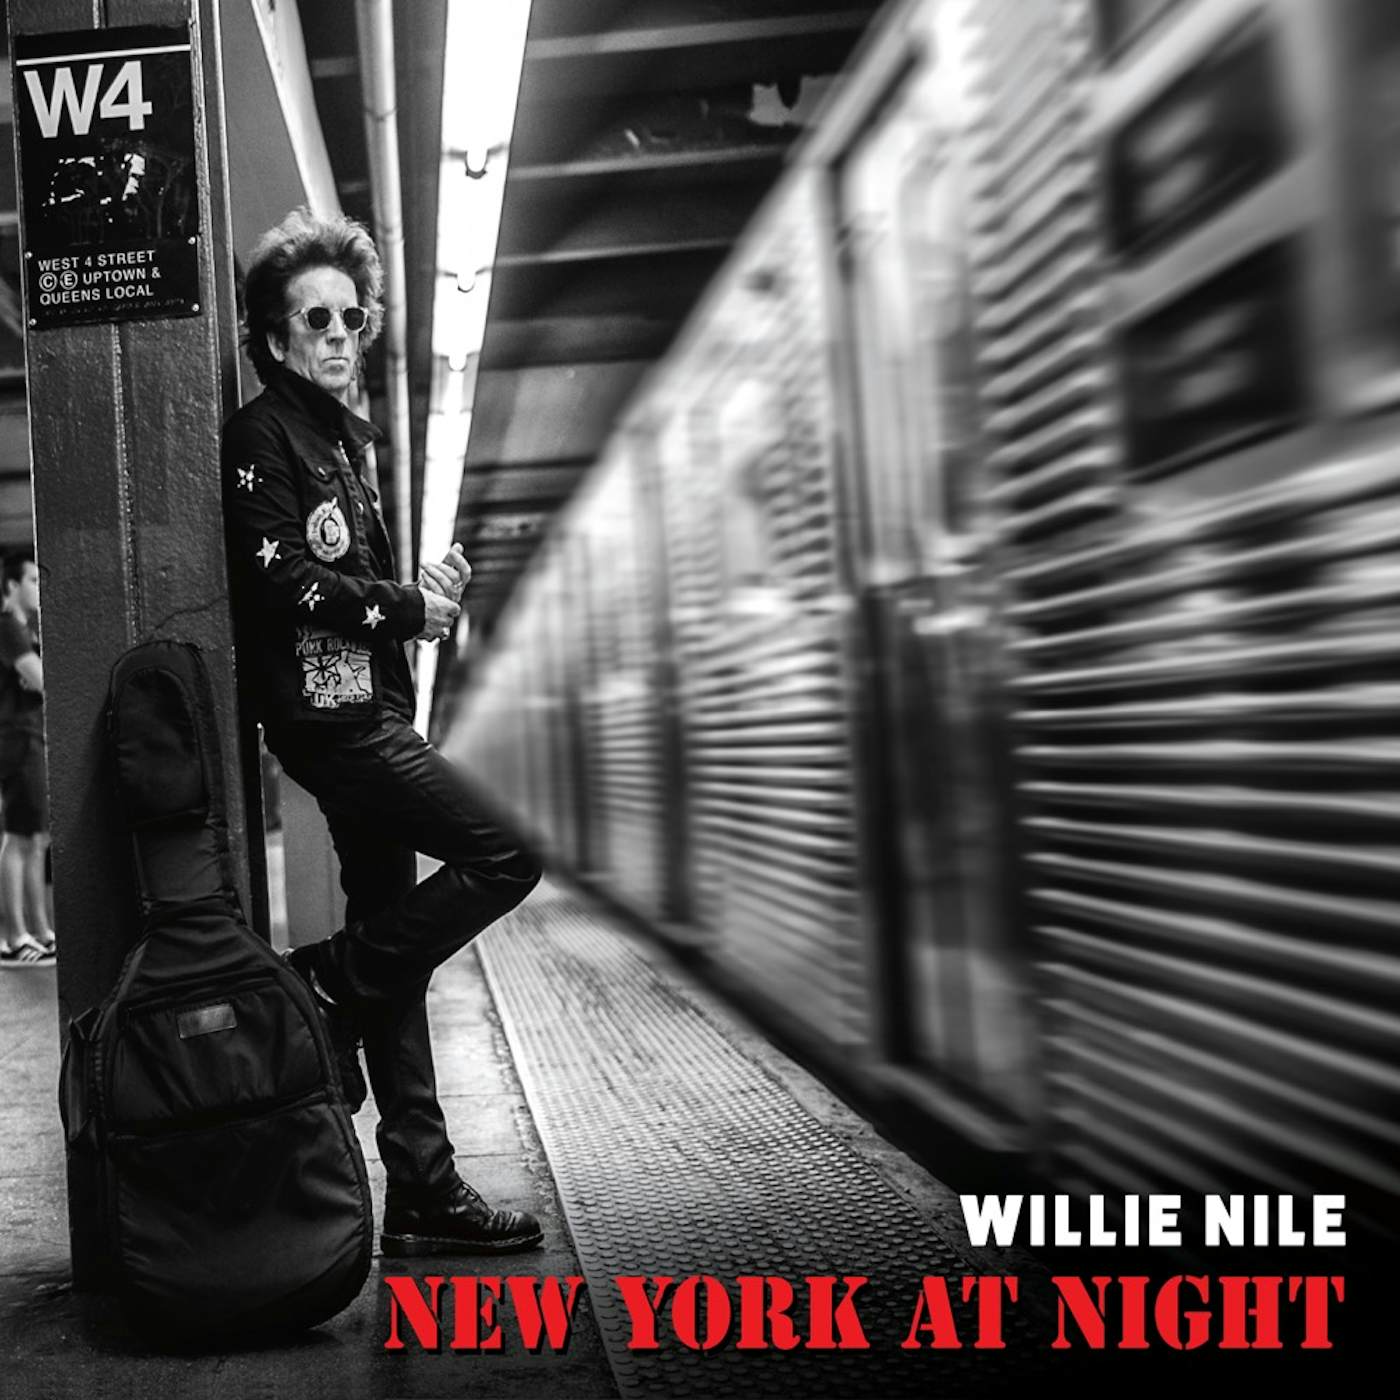 Willie Nile NEW YORK AT NIGHT Vinyl Record